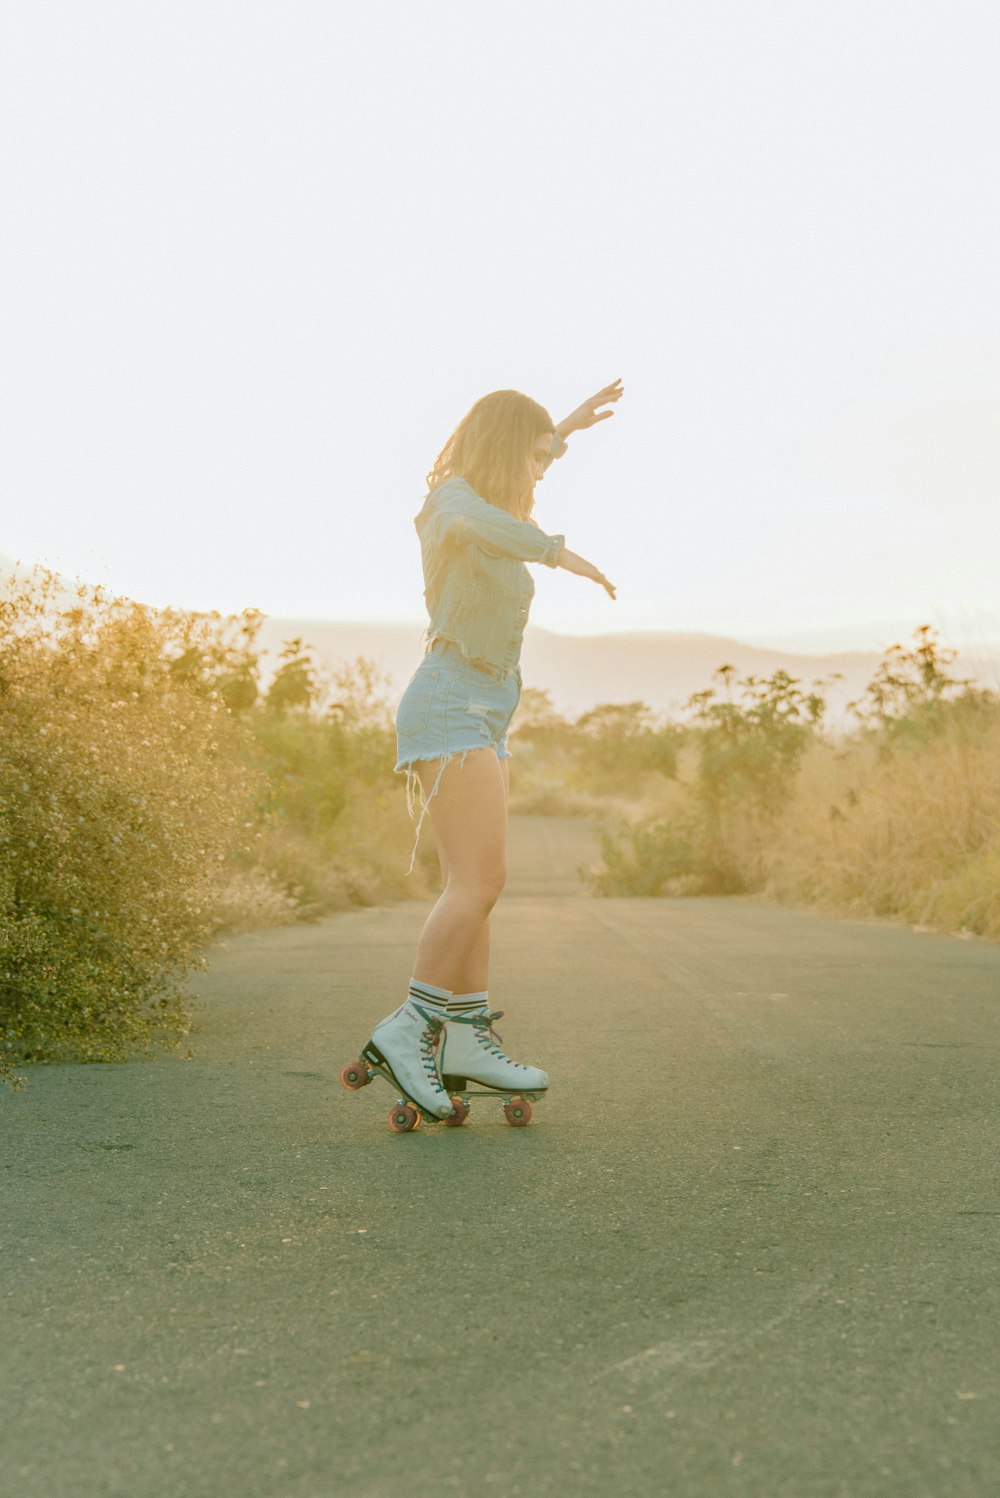 a woman riding a skateboard down a road